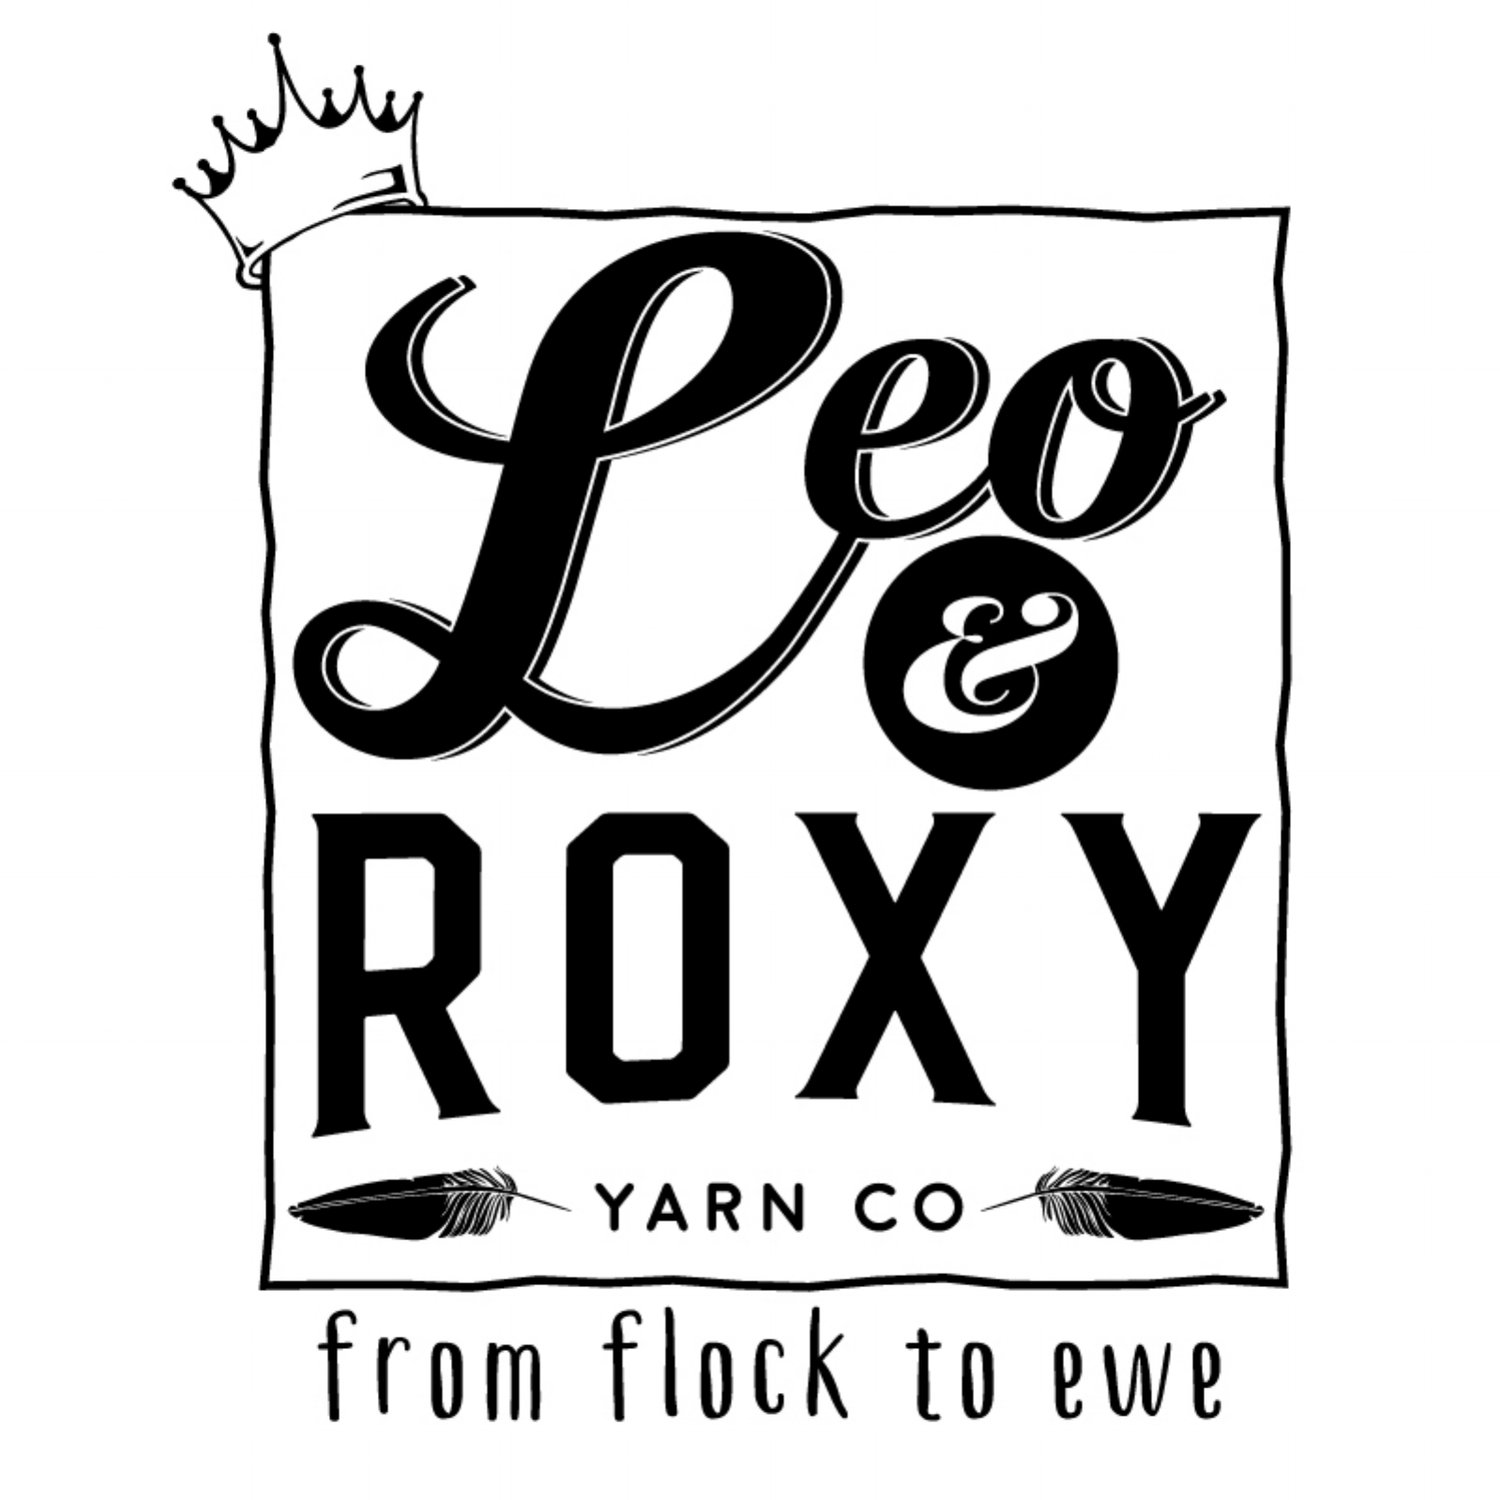 Leo And Roxy Yarn Co